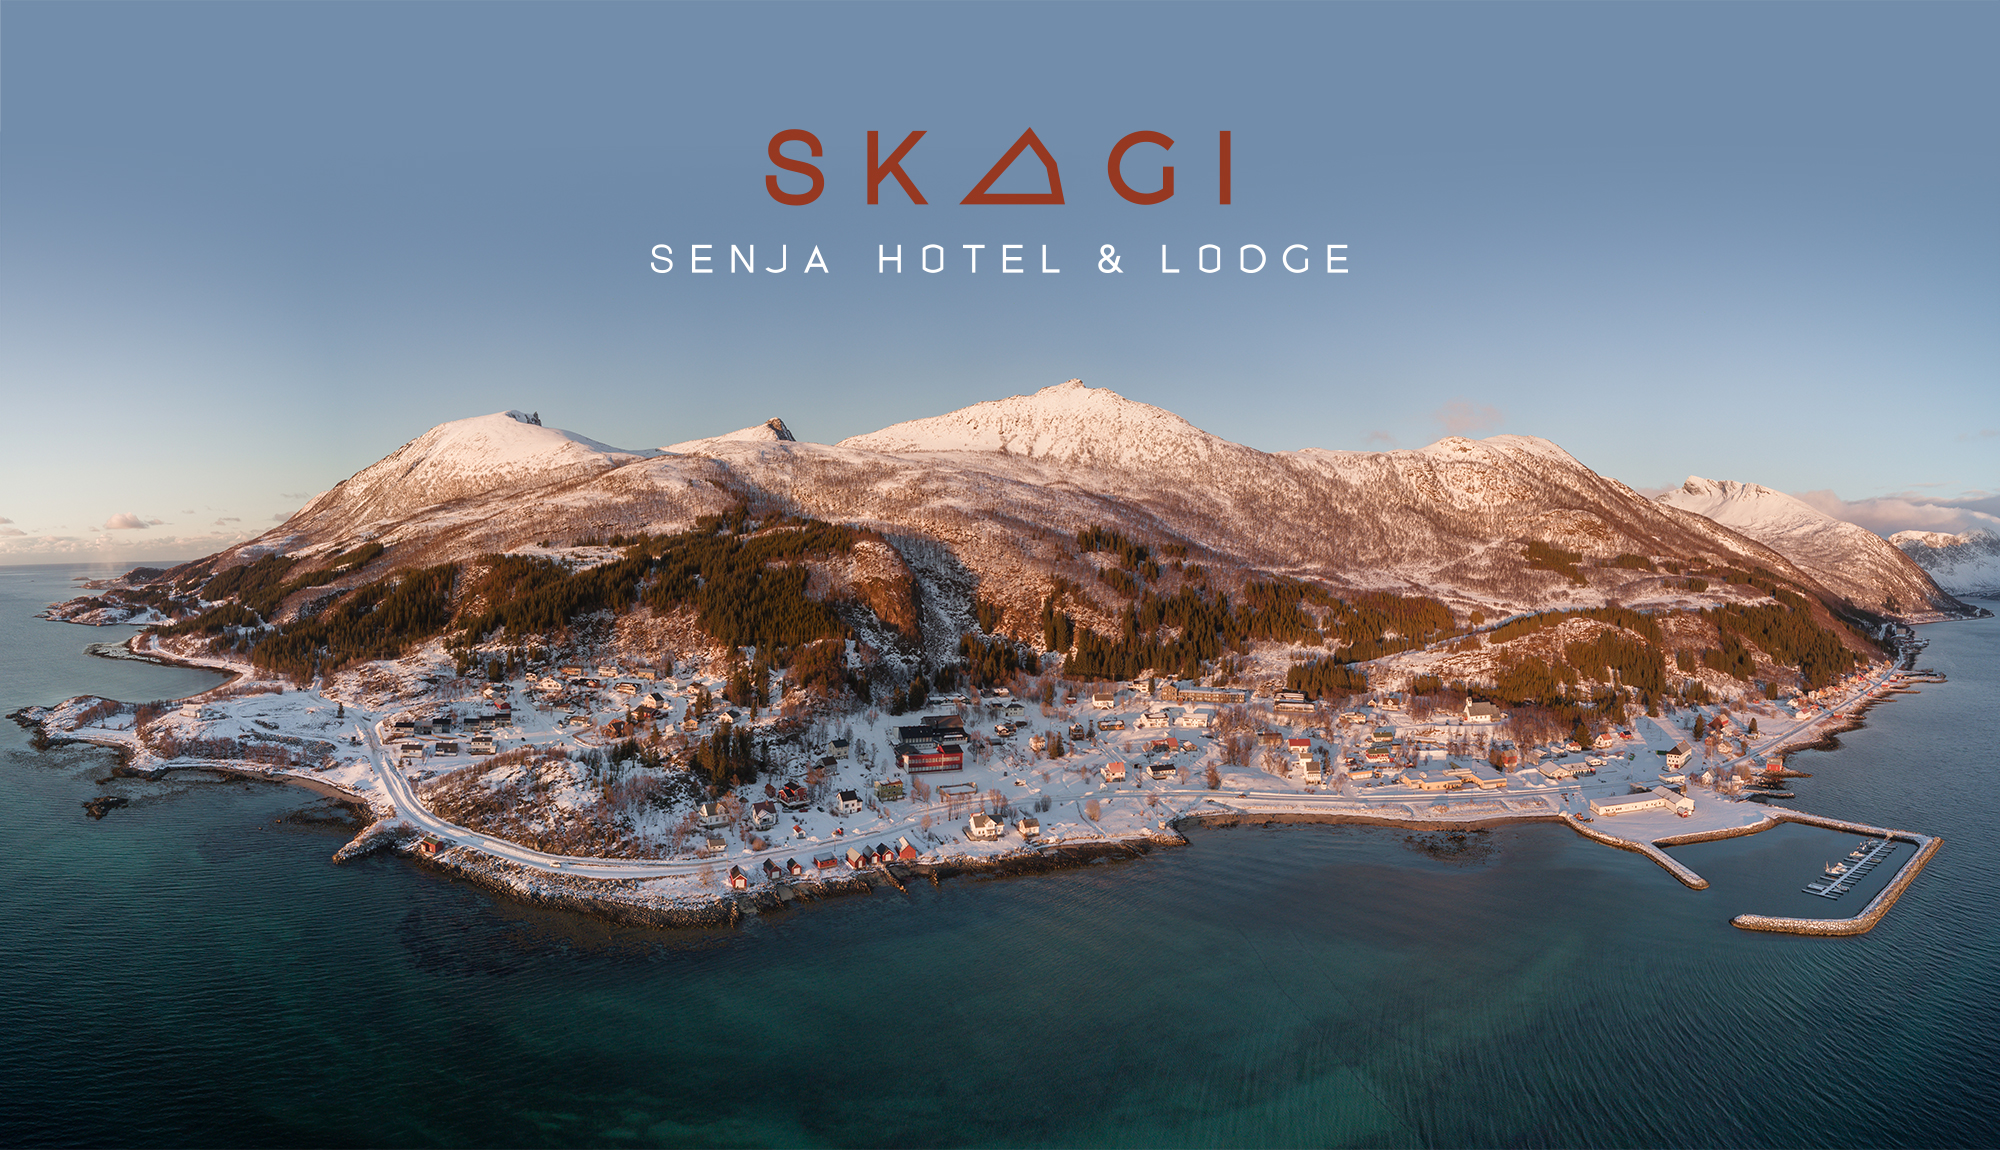 Visuell identitet for Skagi Senja hotel & lodge